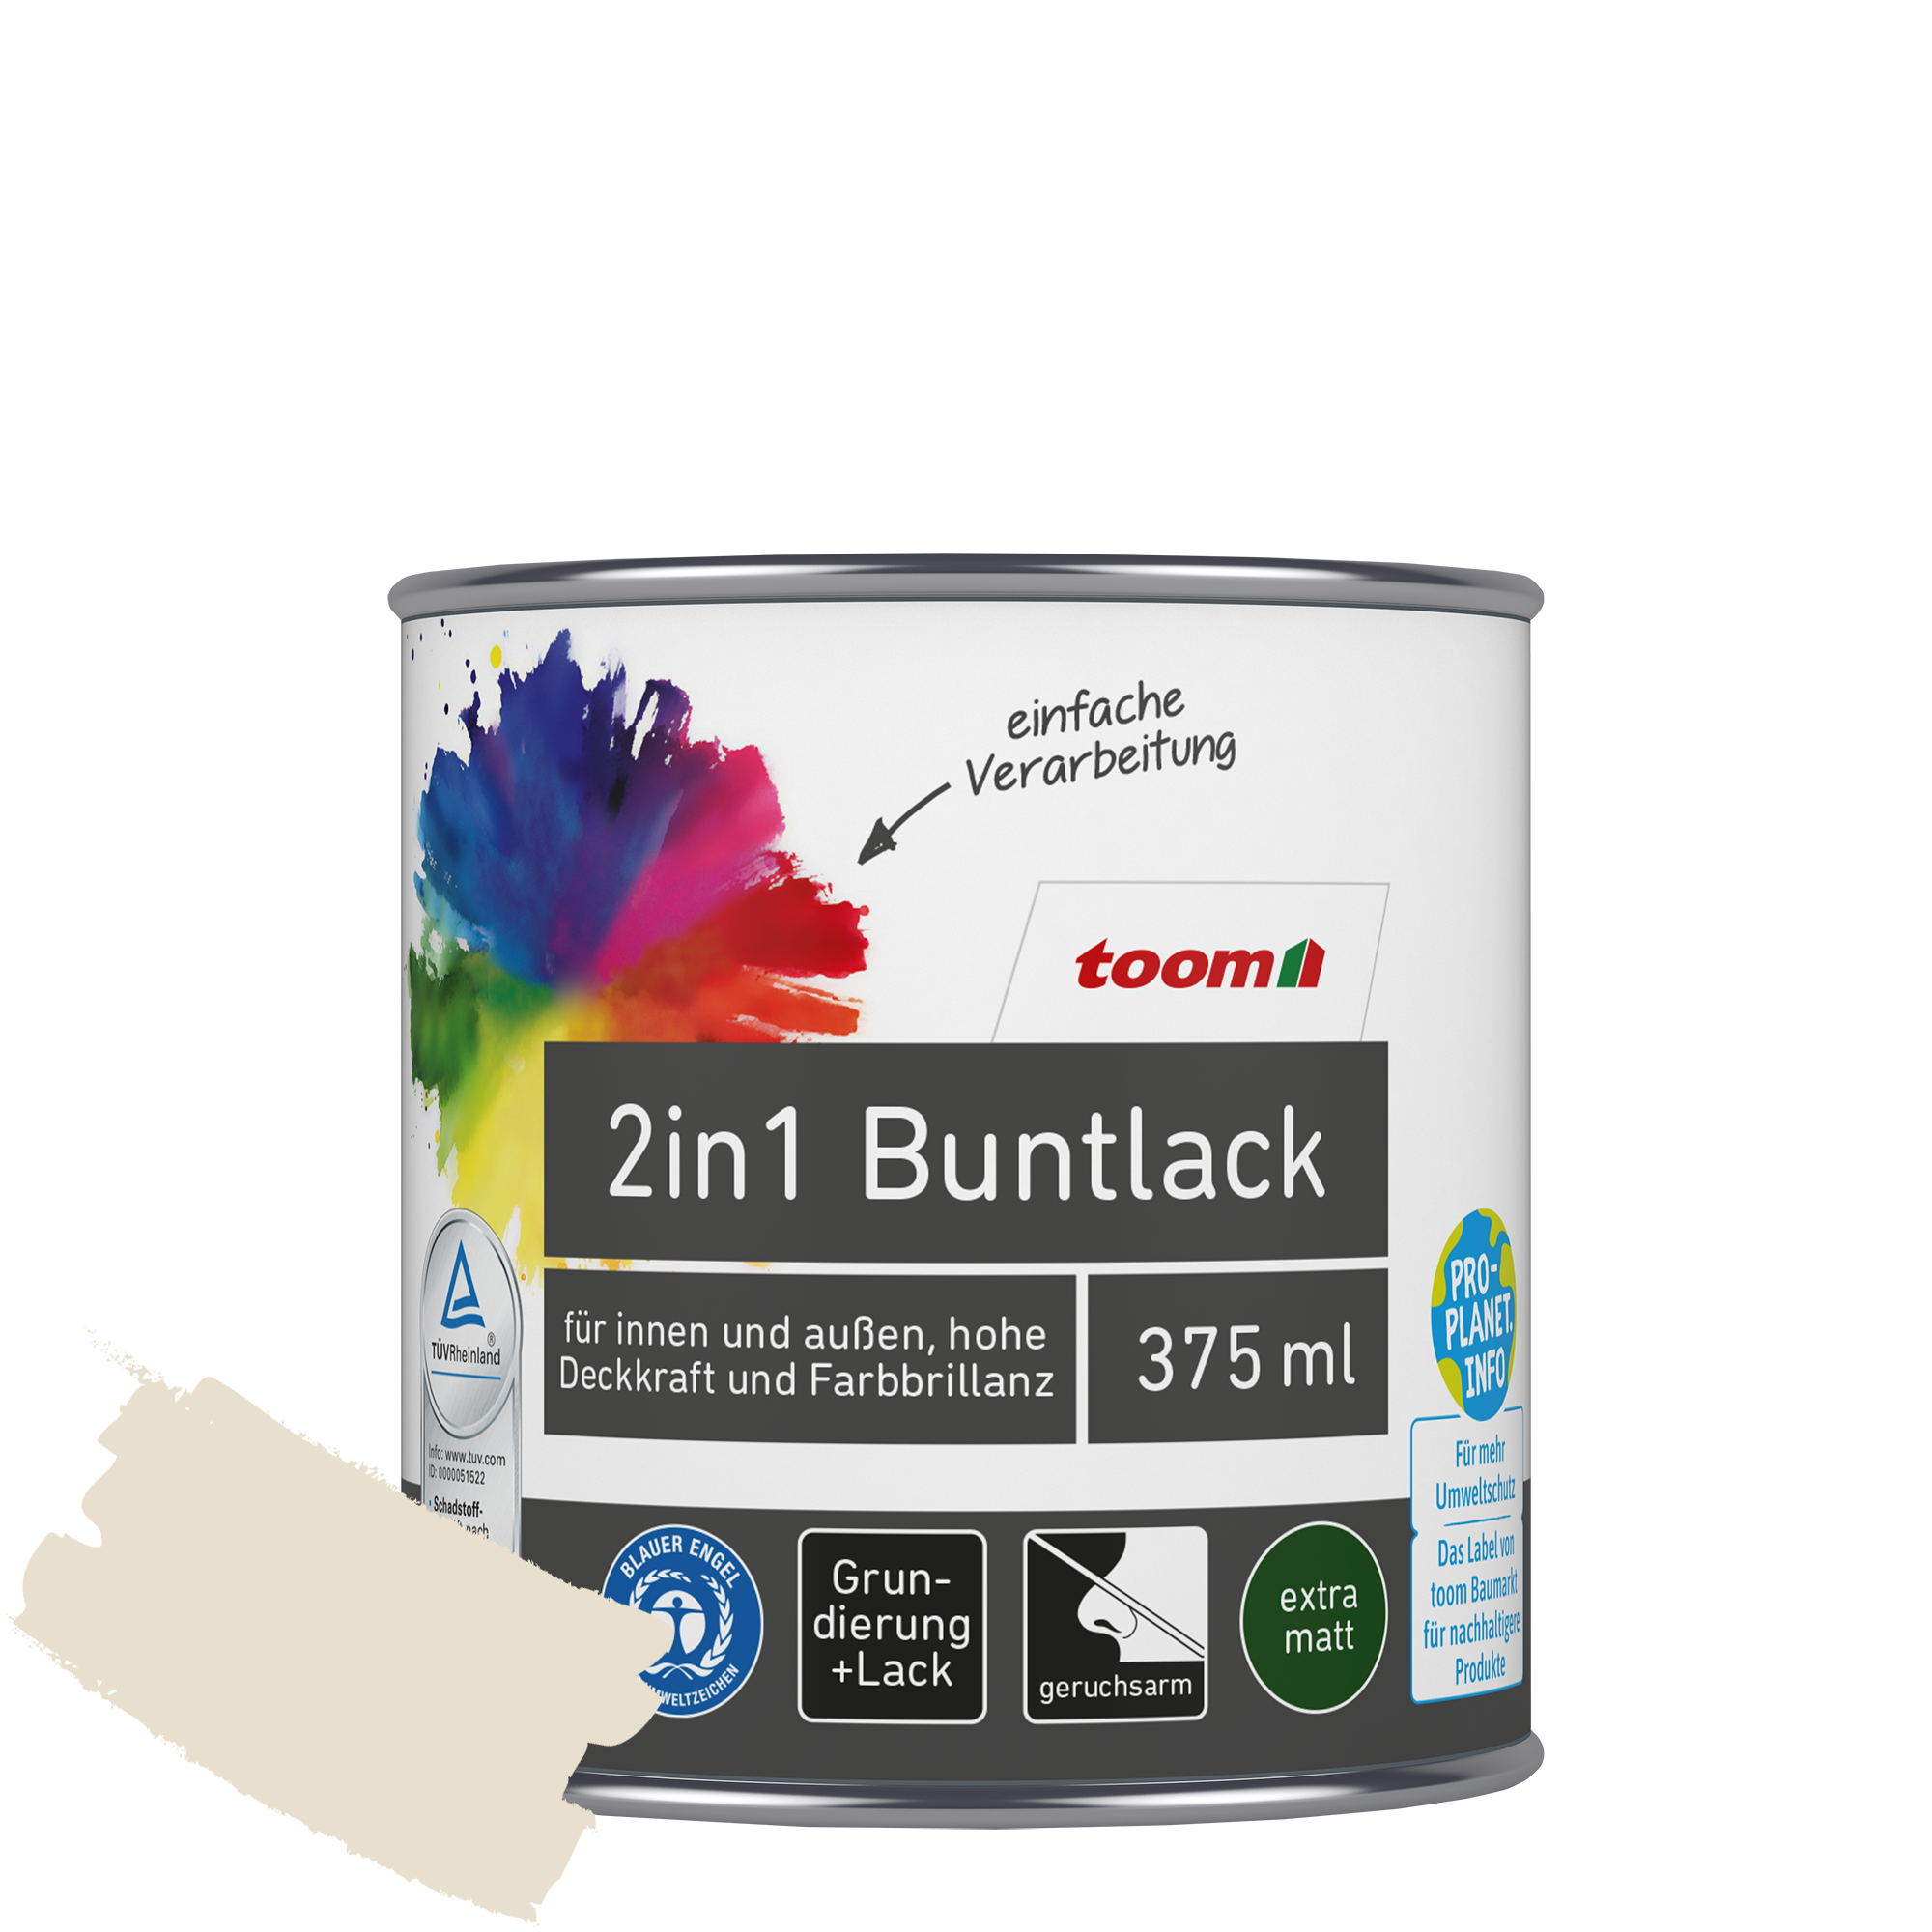 2in1 Buntlack 'Bergkristall' cremeweiß matt 375 ml + product picture